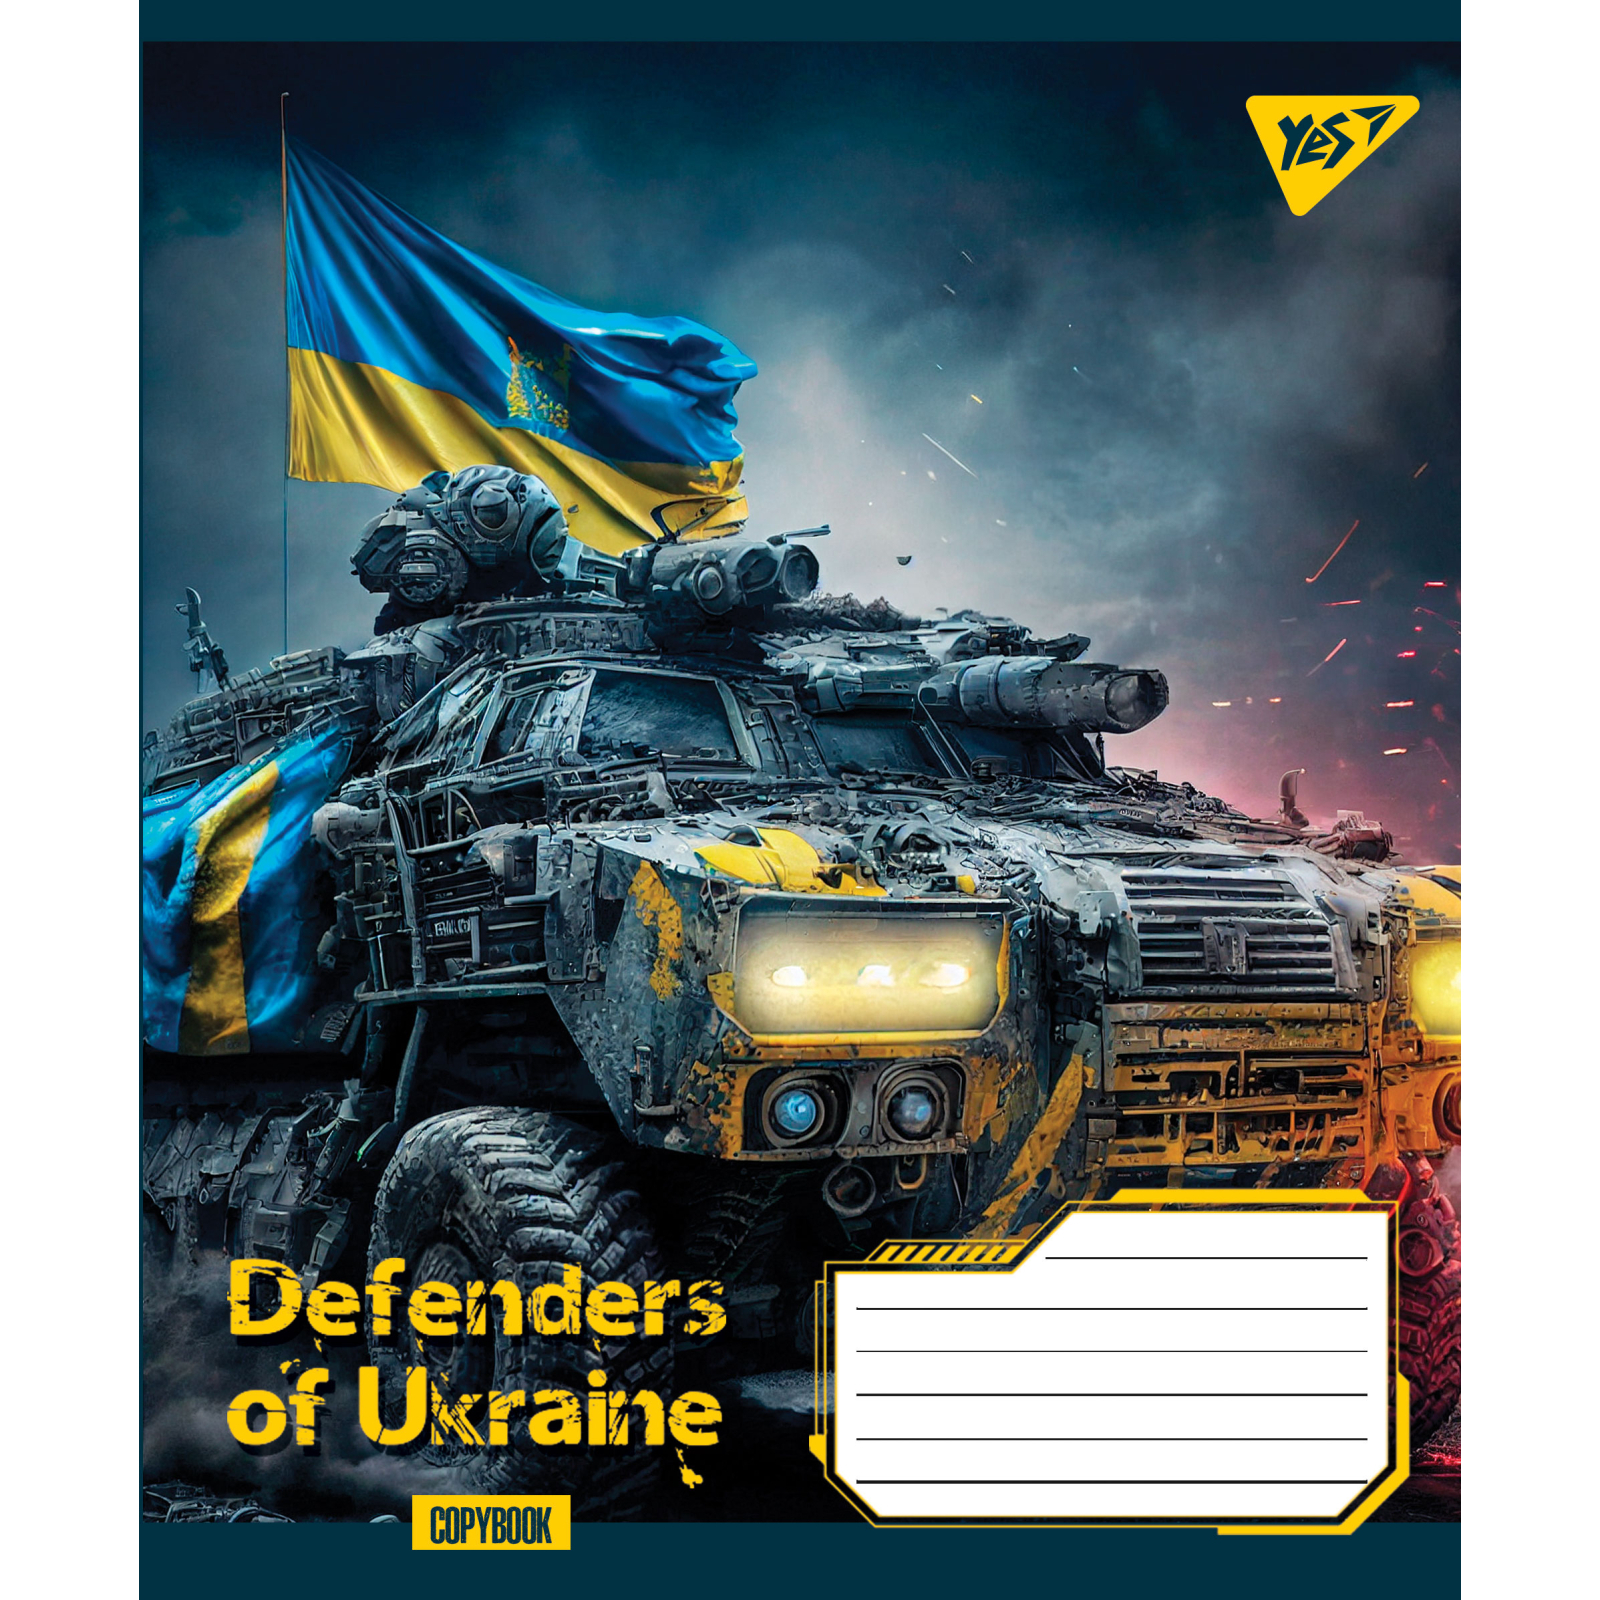 Зошит Yes А5 Defenders of Ukraine 60 аркушів, клітинка (766469) зображення 3